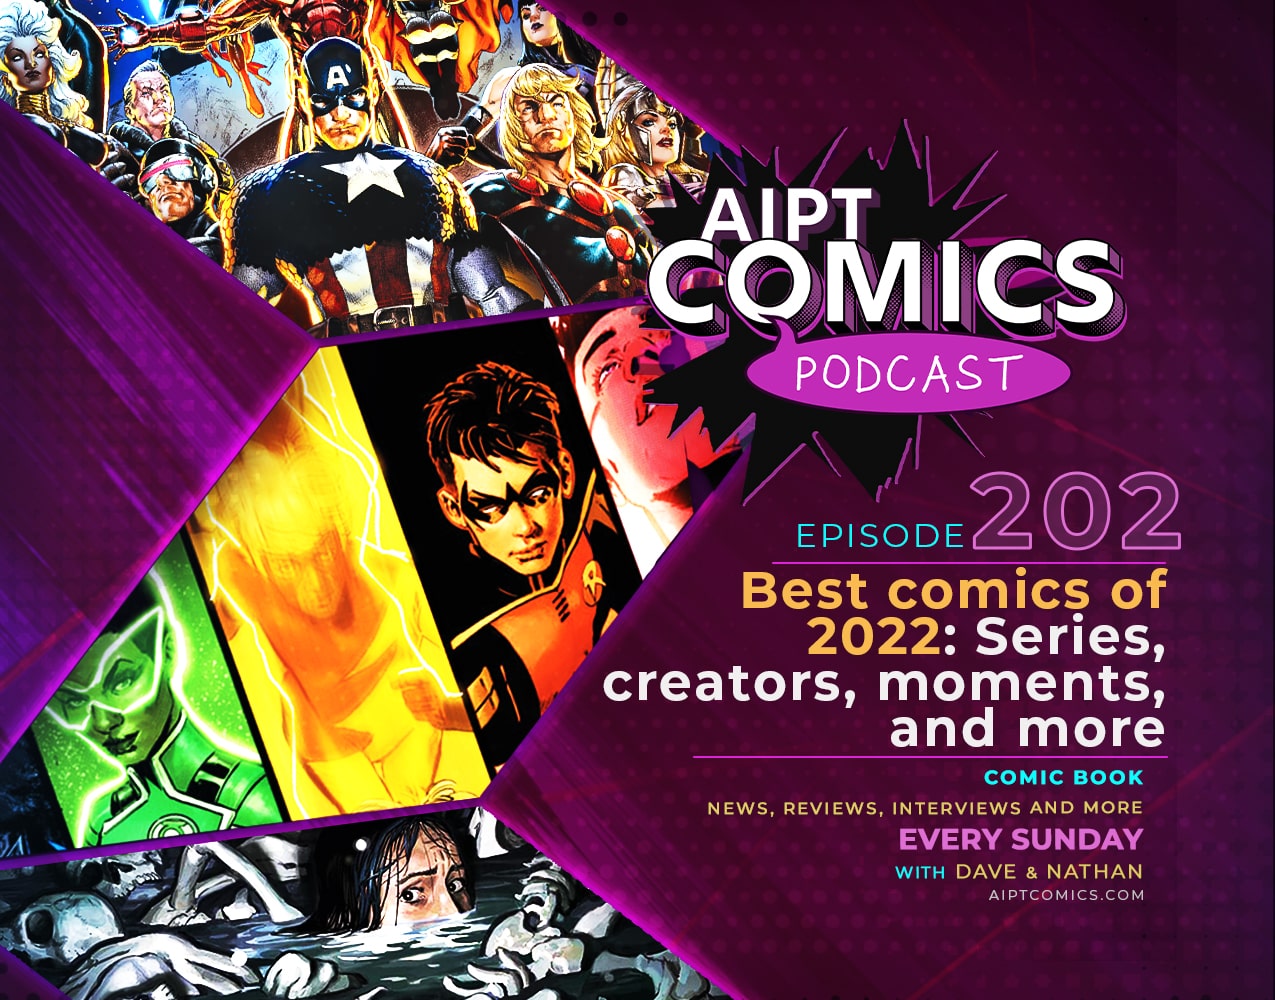 AIPT Comics Podcast episode 202: Best comic books of 2022: Creators, moments, and more